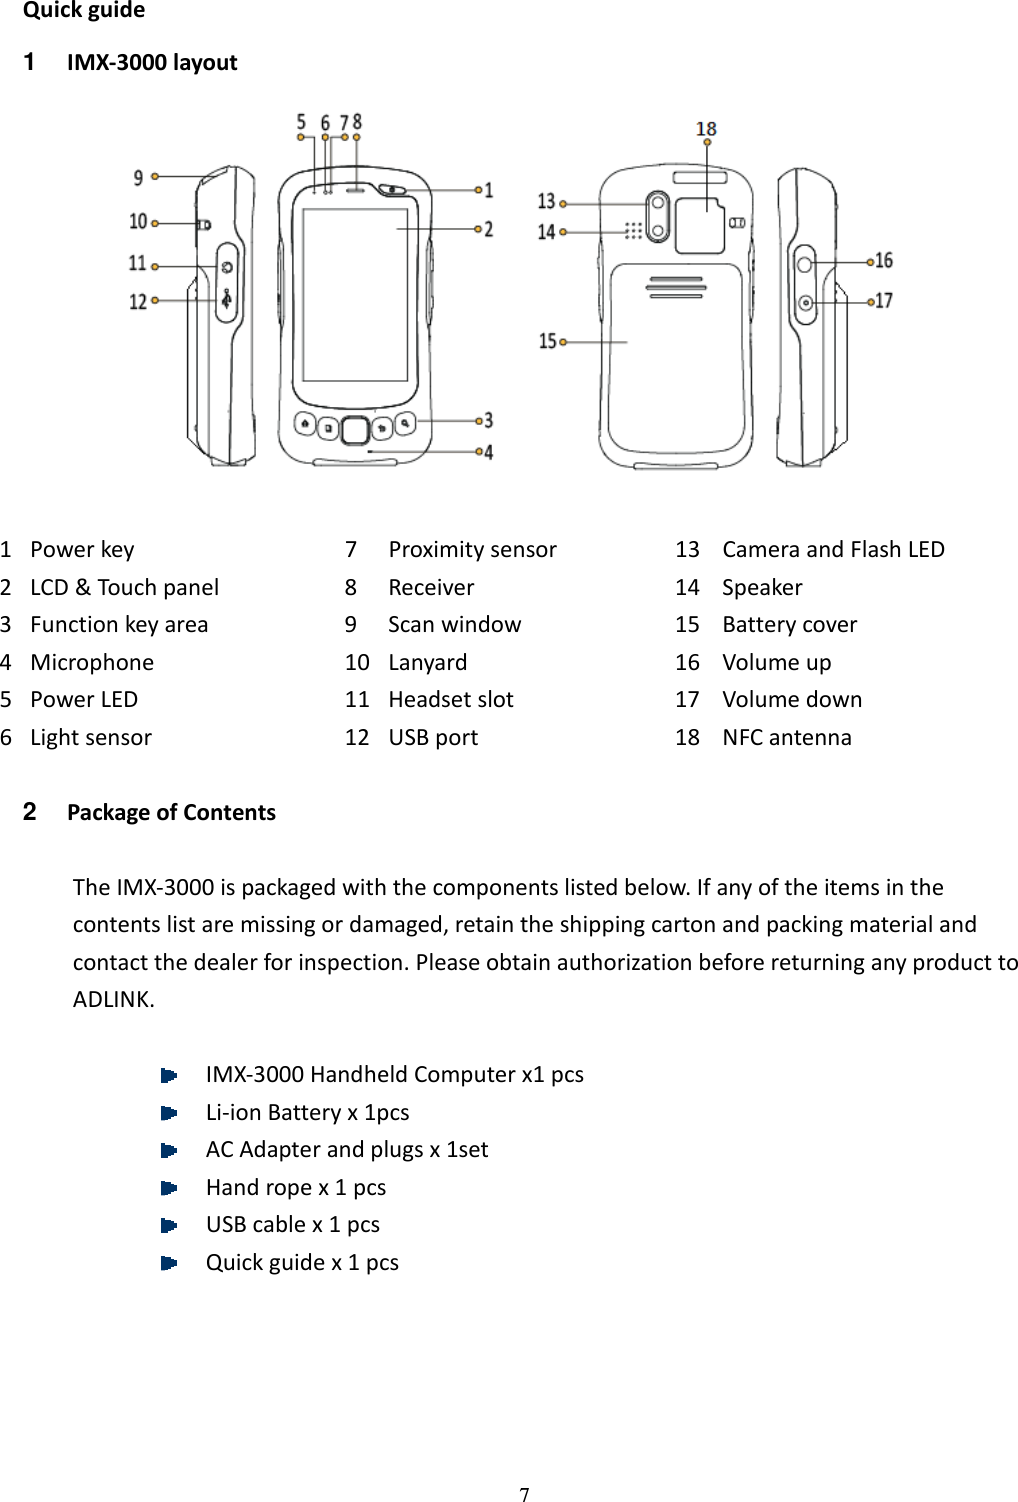 Adlink Technology Imx 3000 Rugged Handheld Device User Manual